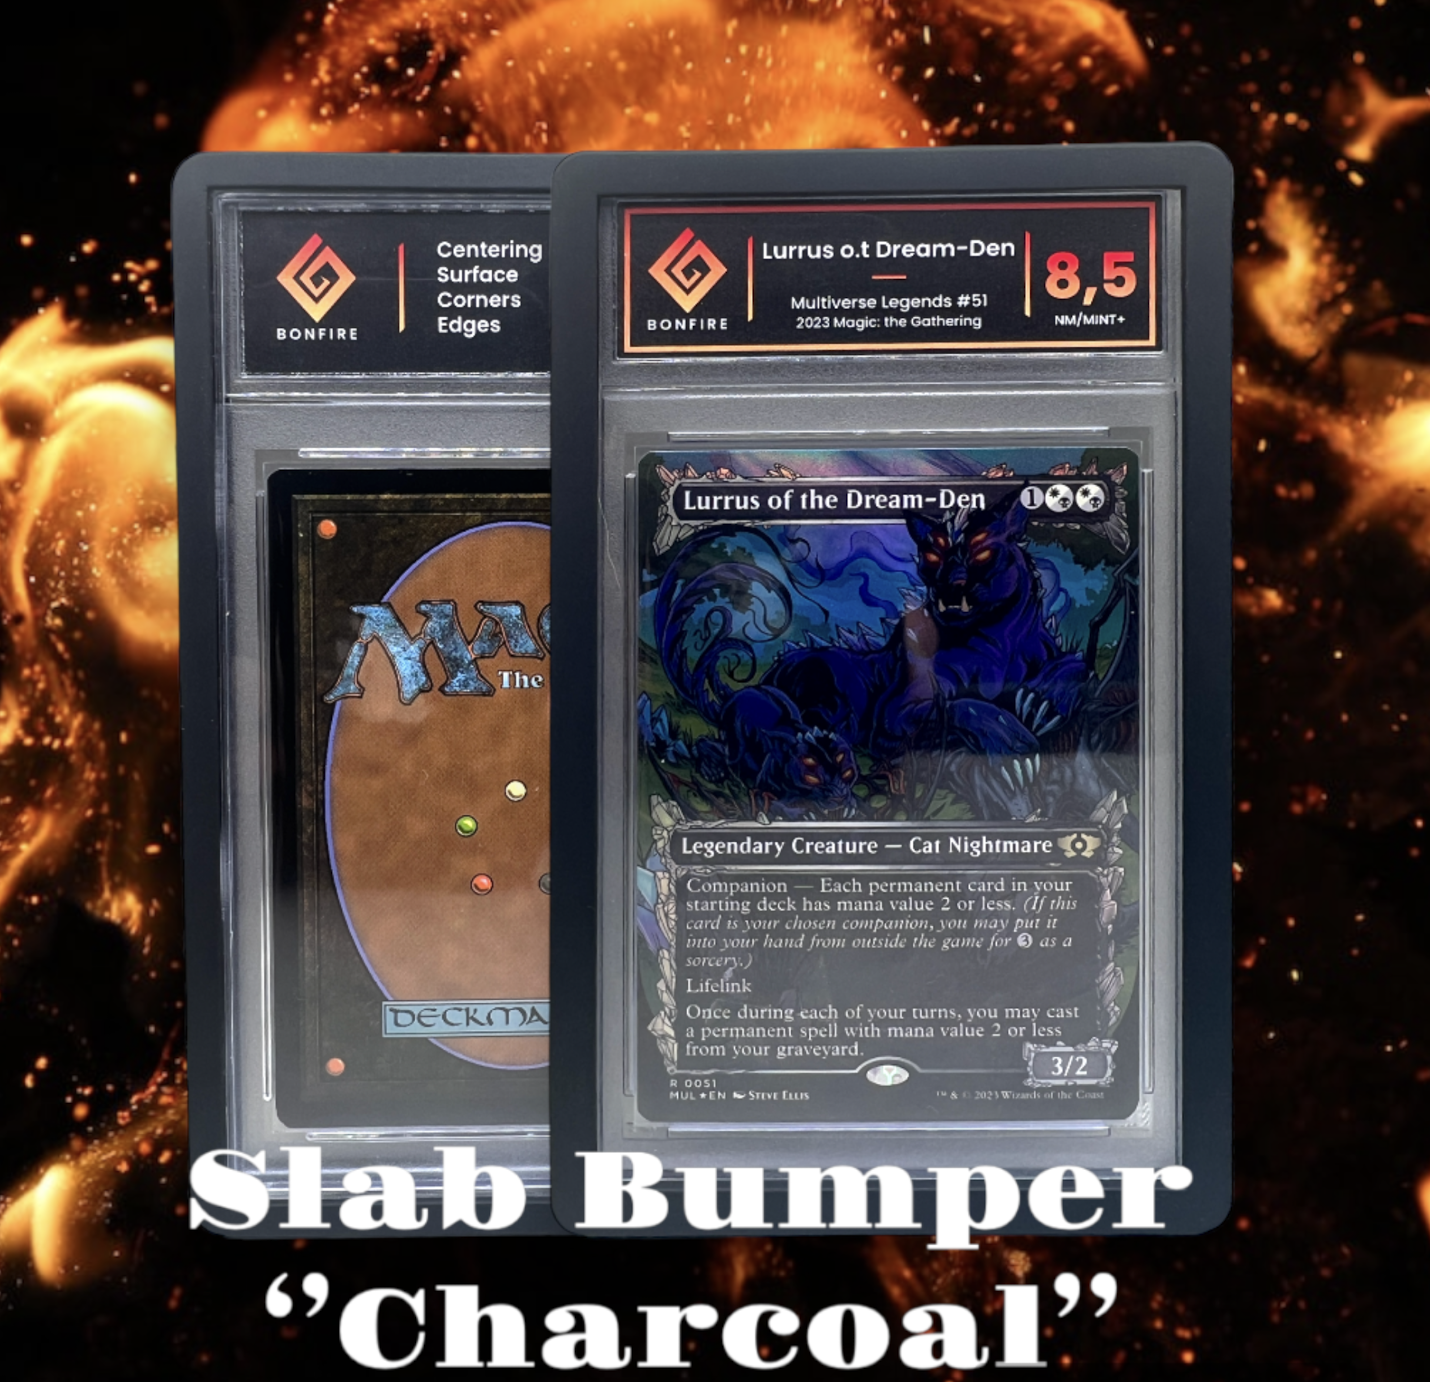 Slab Bumper ”Charcoal”